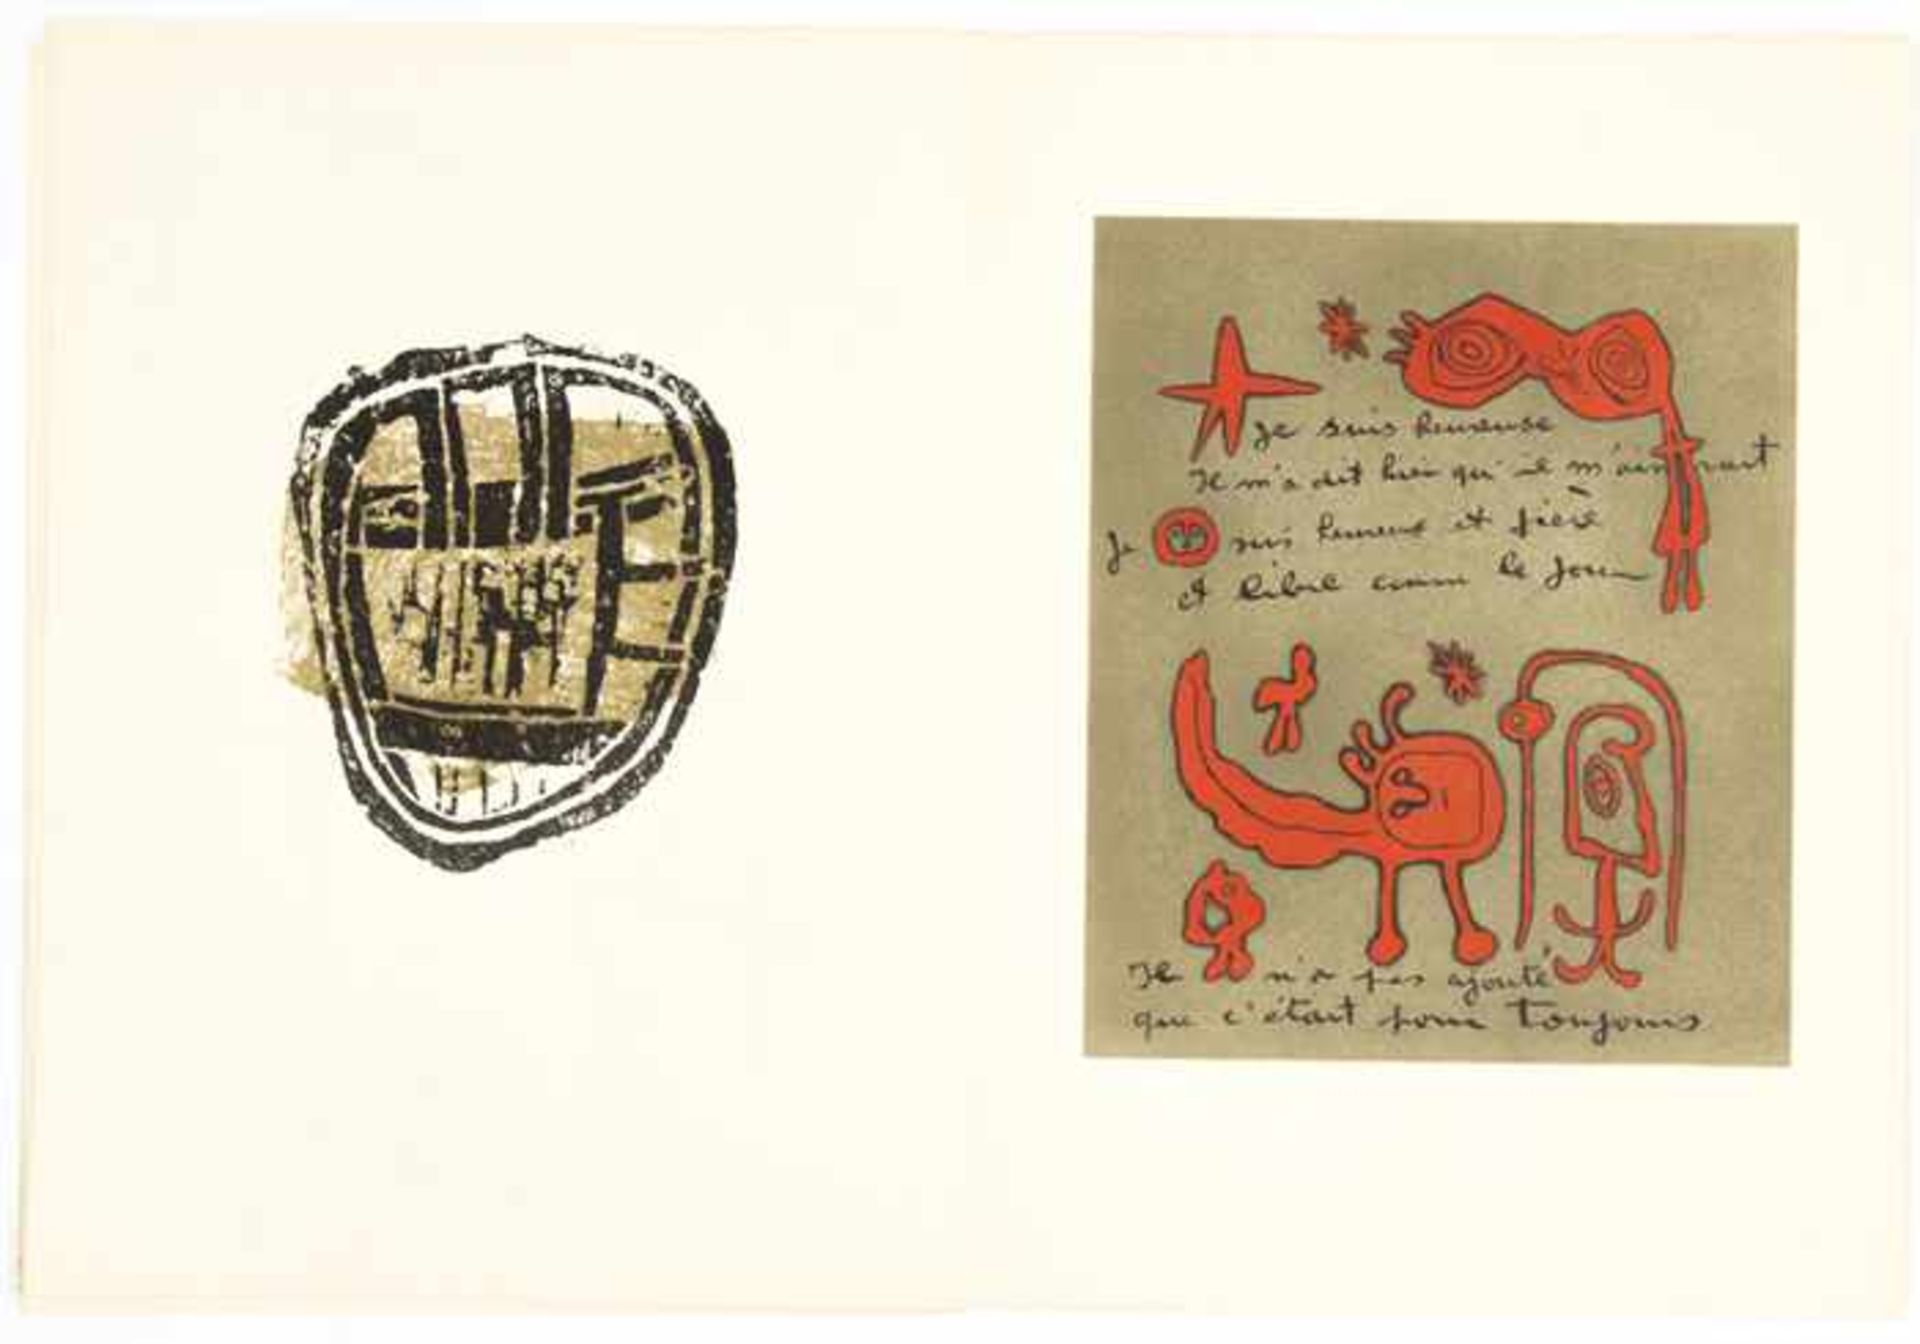 Braque, Georges Derrière le Miror, Edition 112, 1958 Seitenanzahl: 16 - Bild 3 aus 3